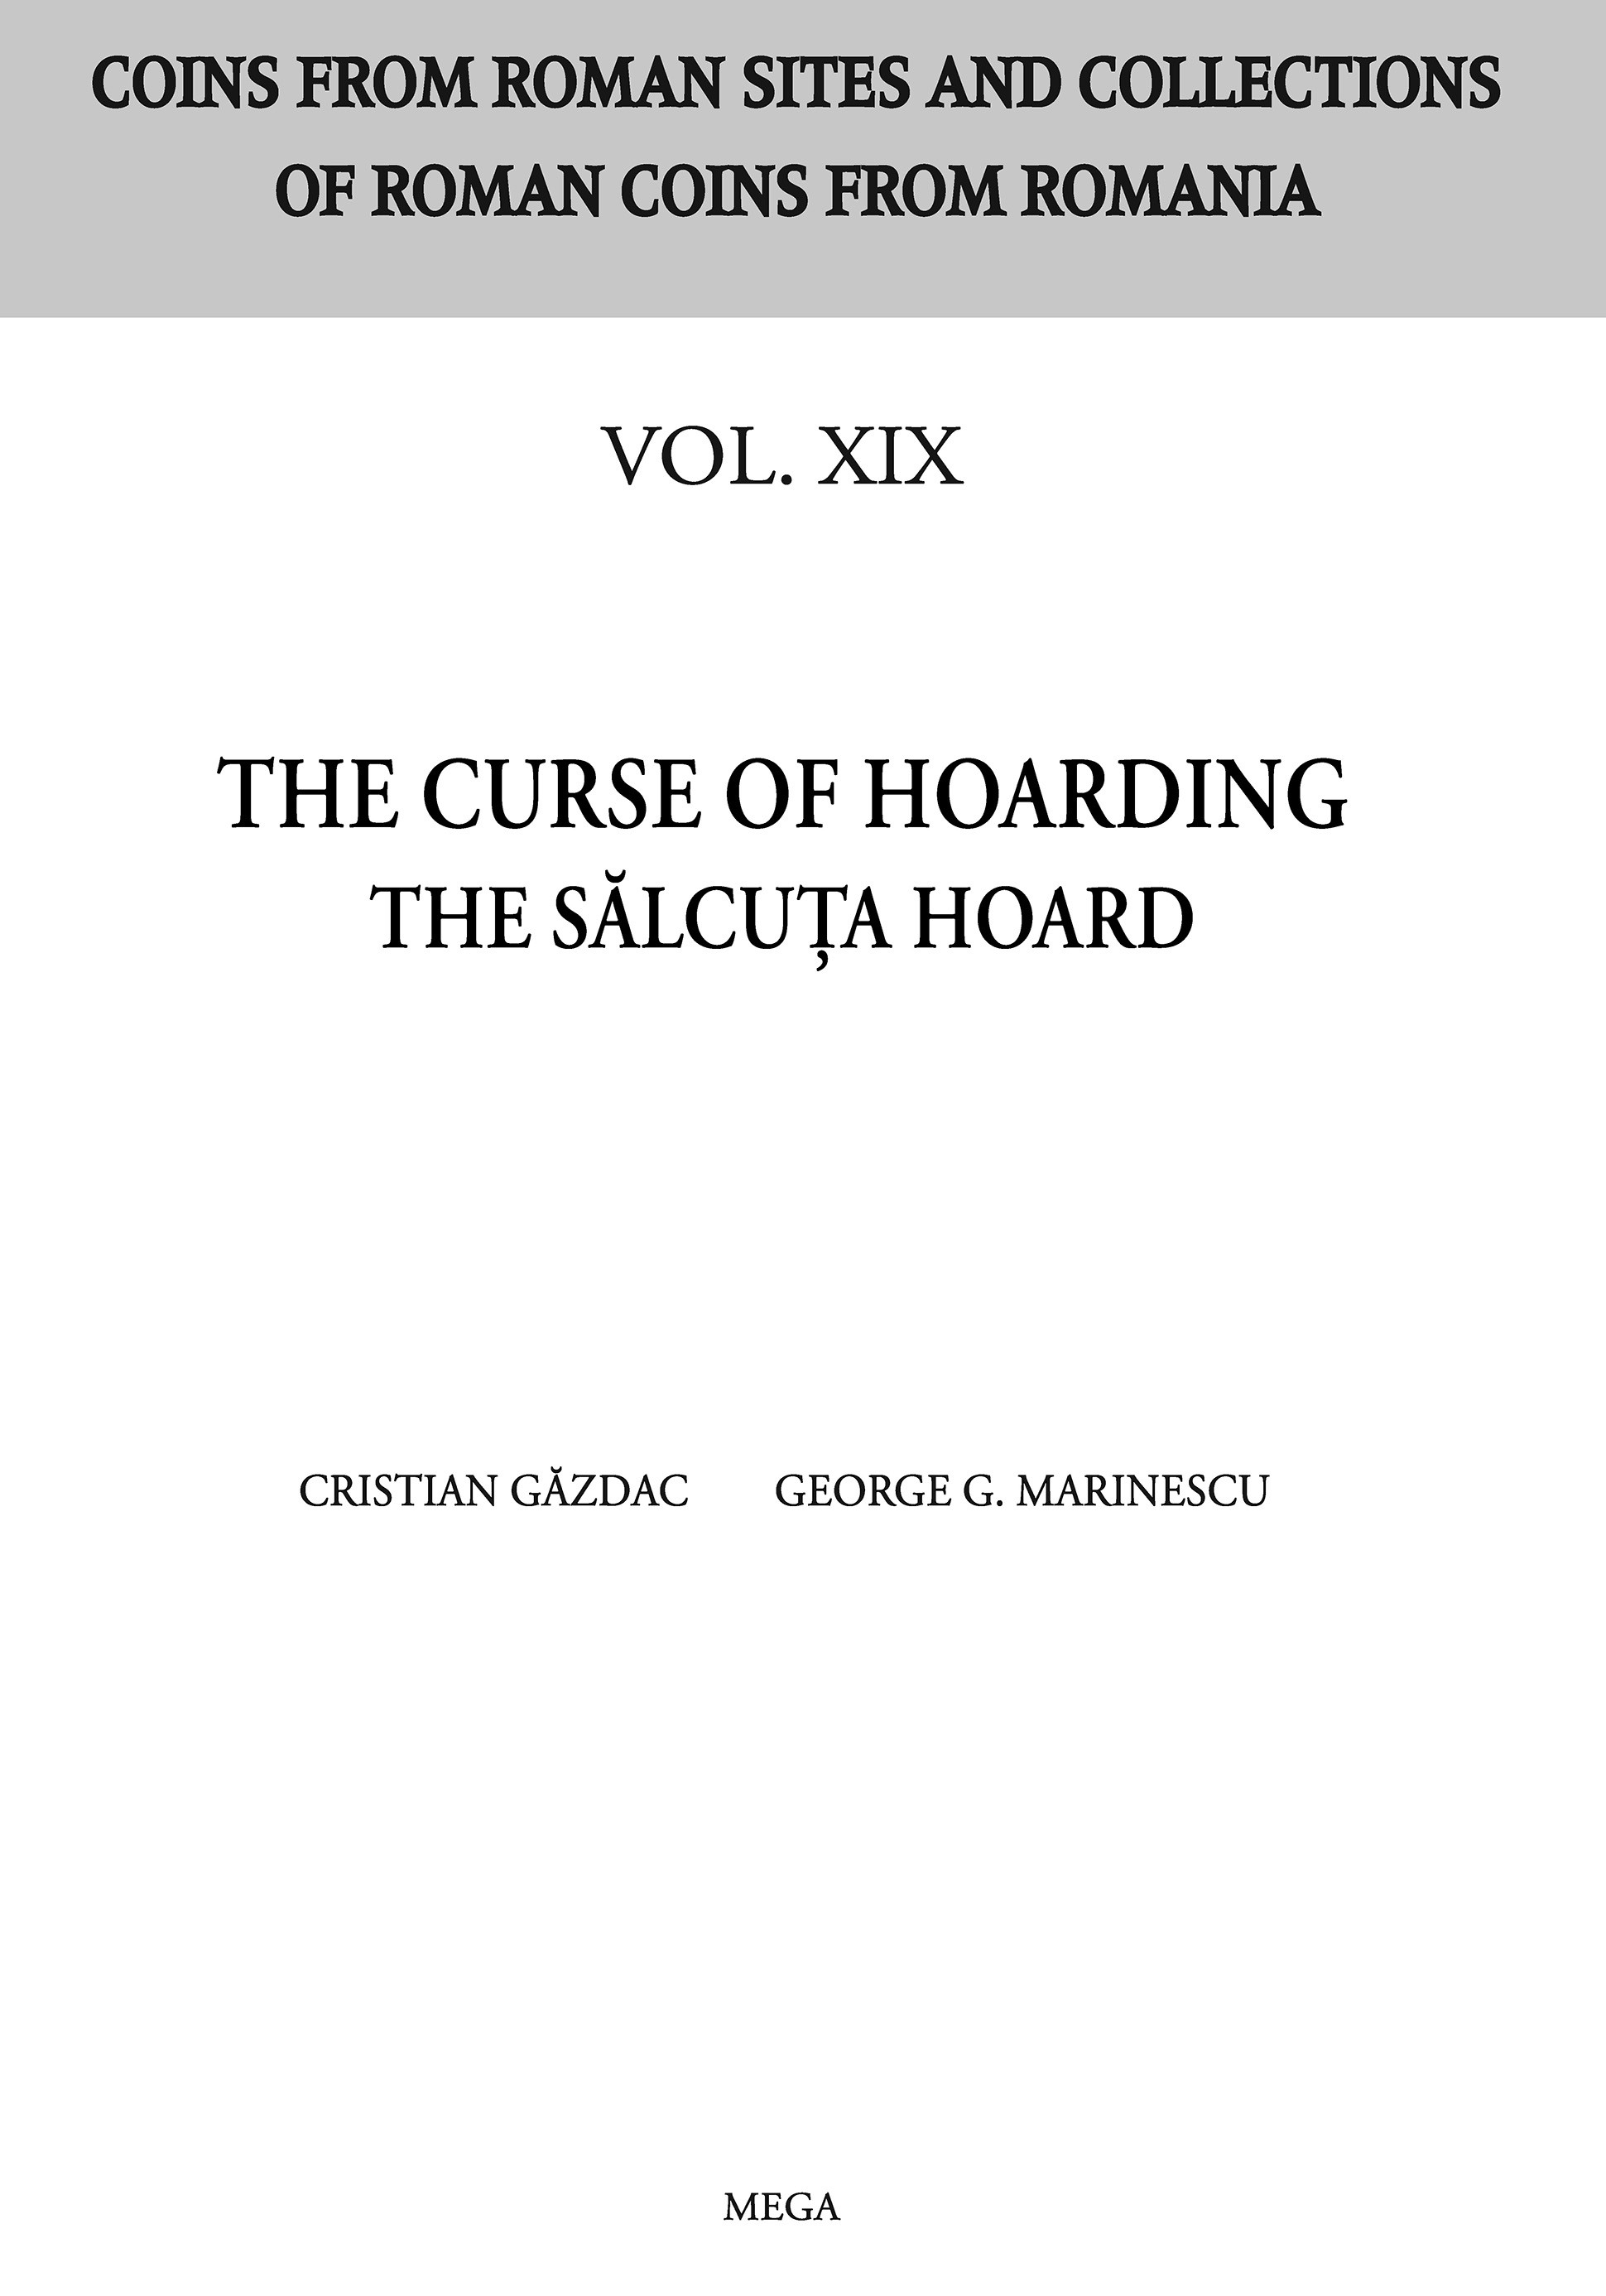 Găzdac, Cristian – George G. Marinescu : The Curse of Hoarding. The Sălcuța Hoard